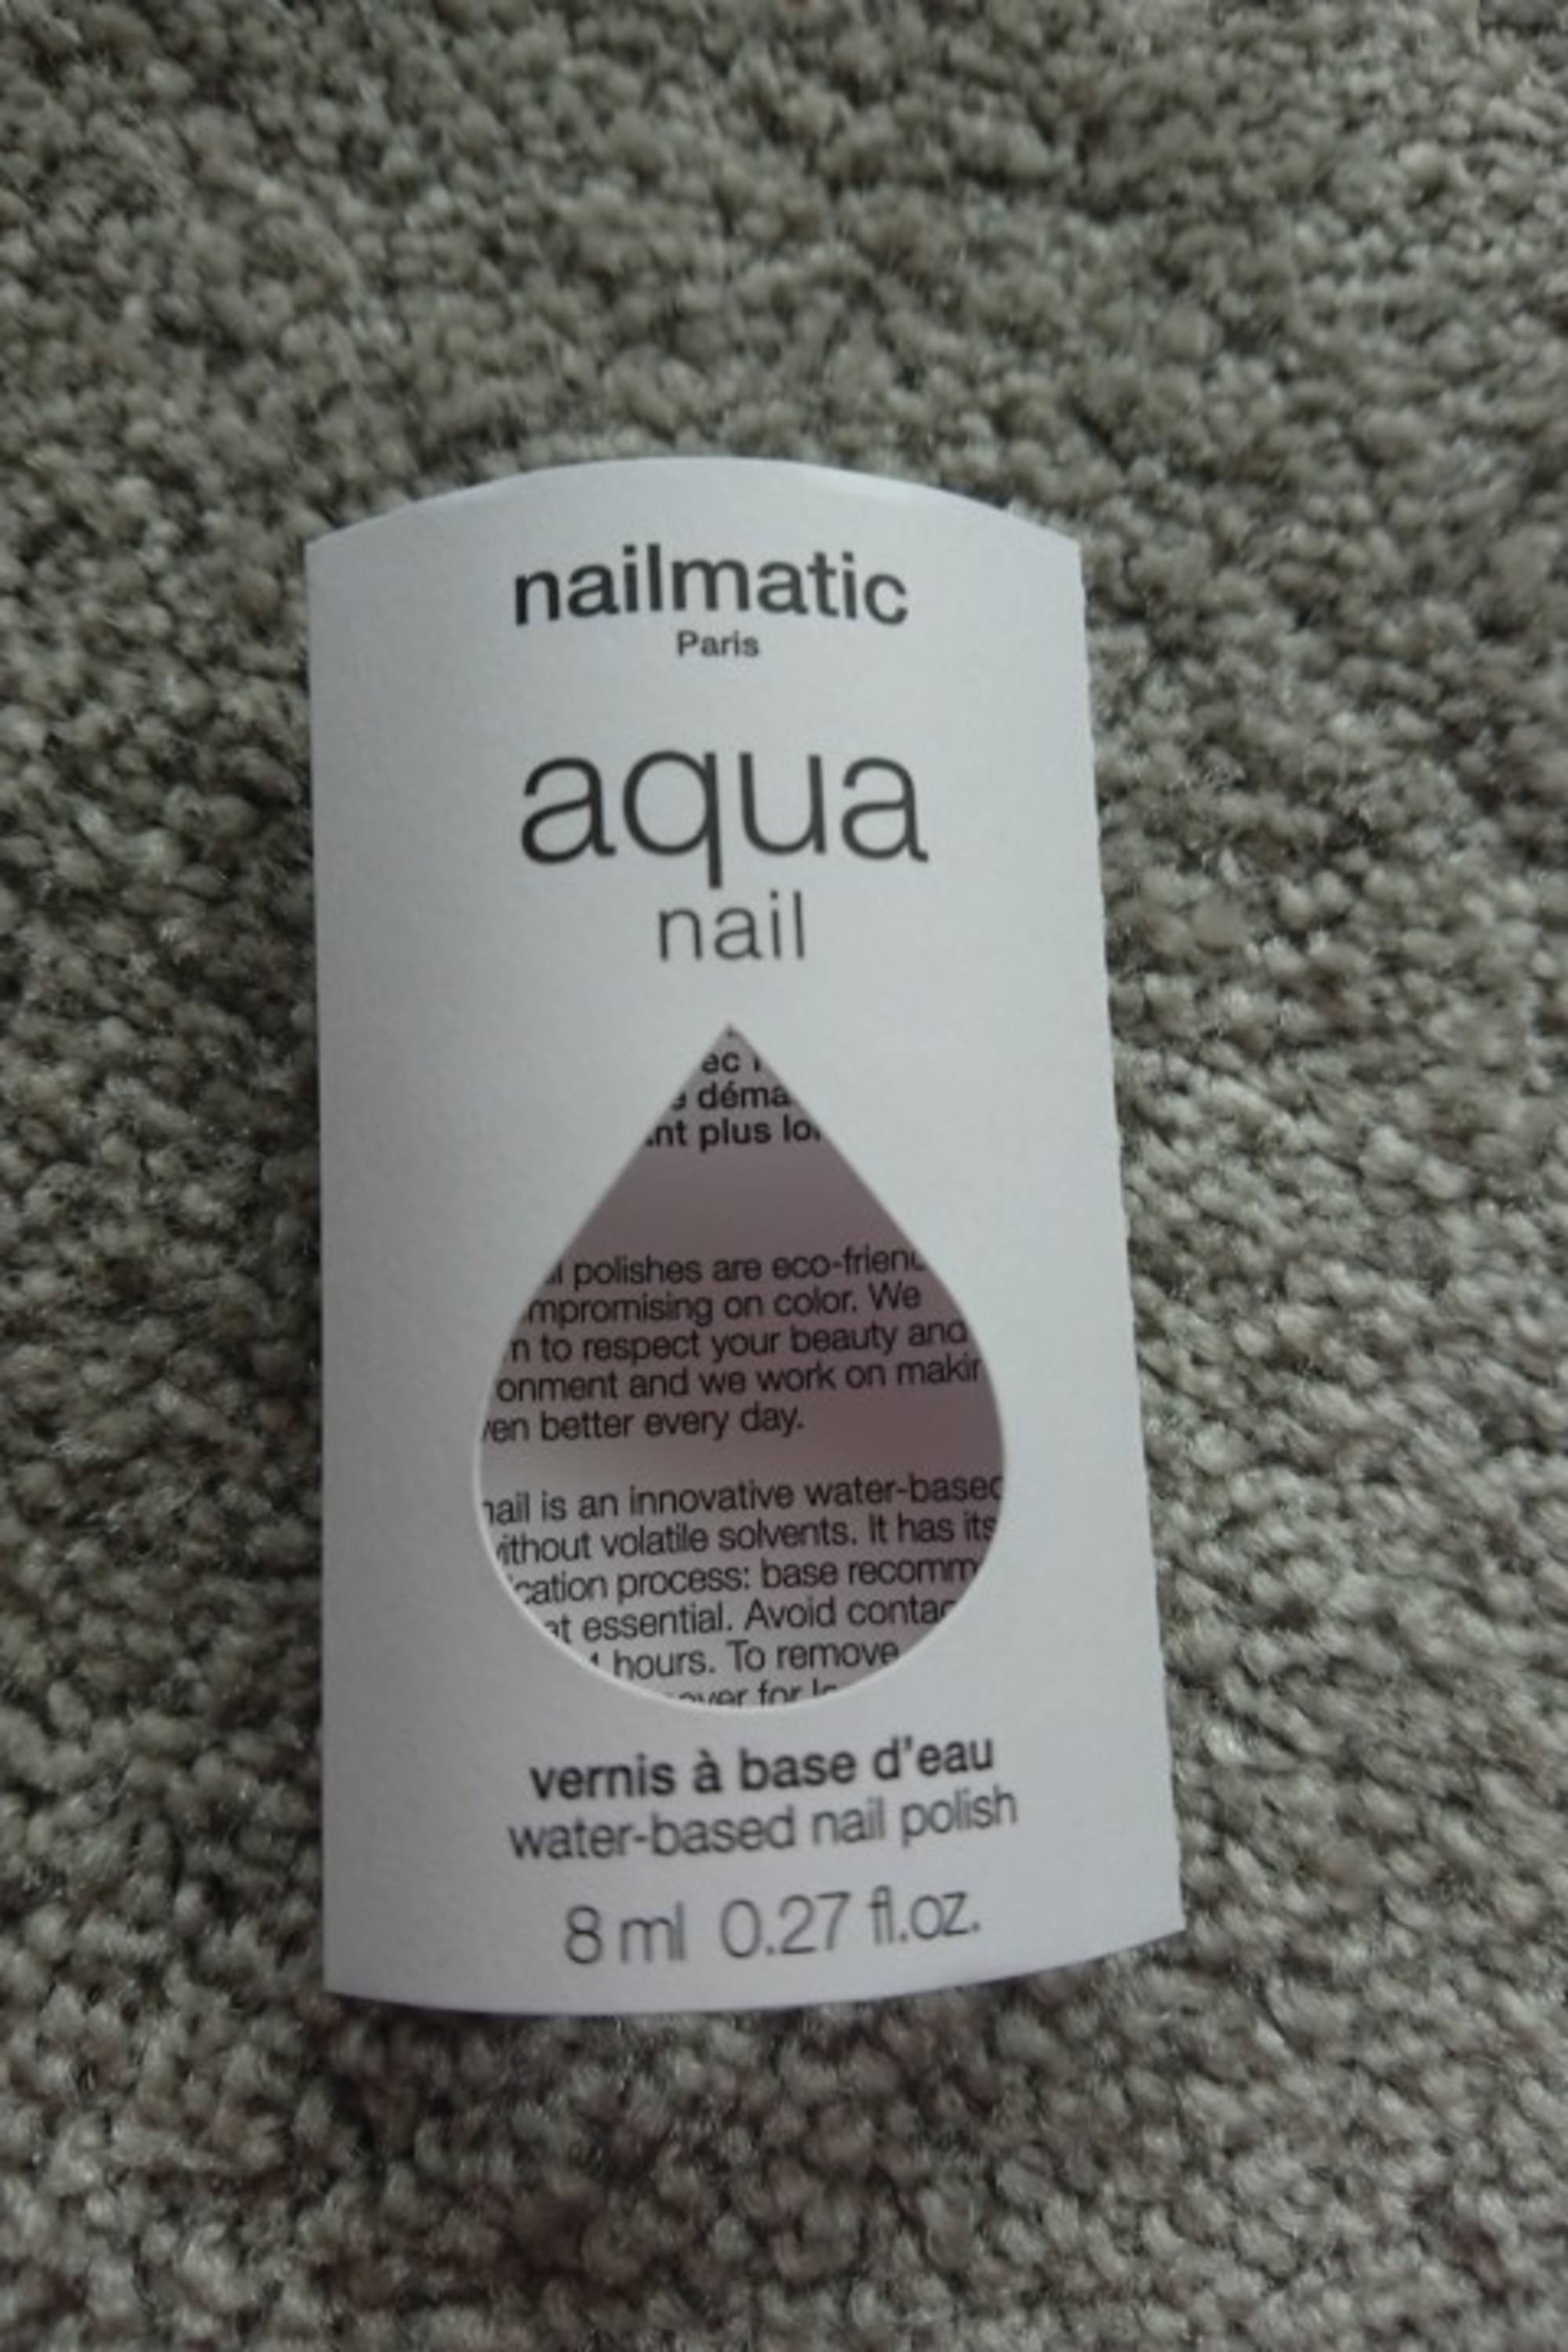 NAILMATIC - Aqua nail - Vernis à base d'eau